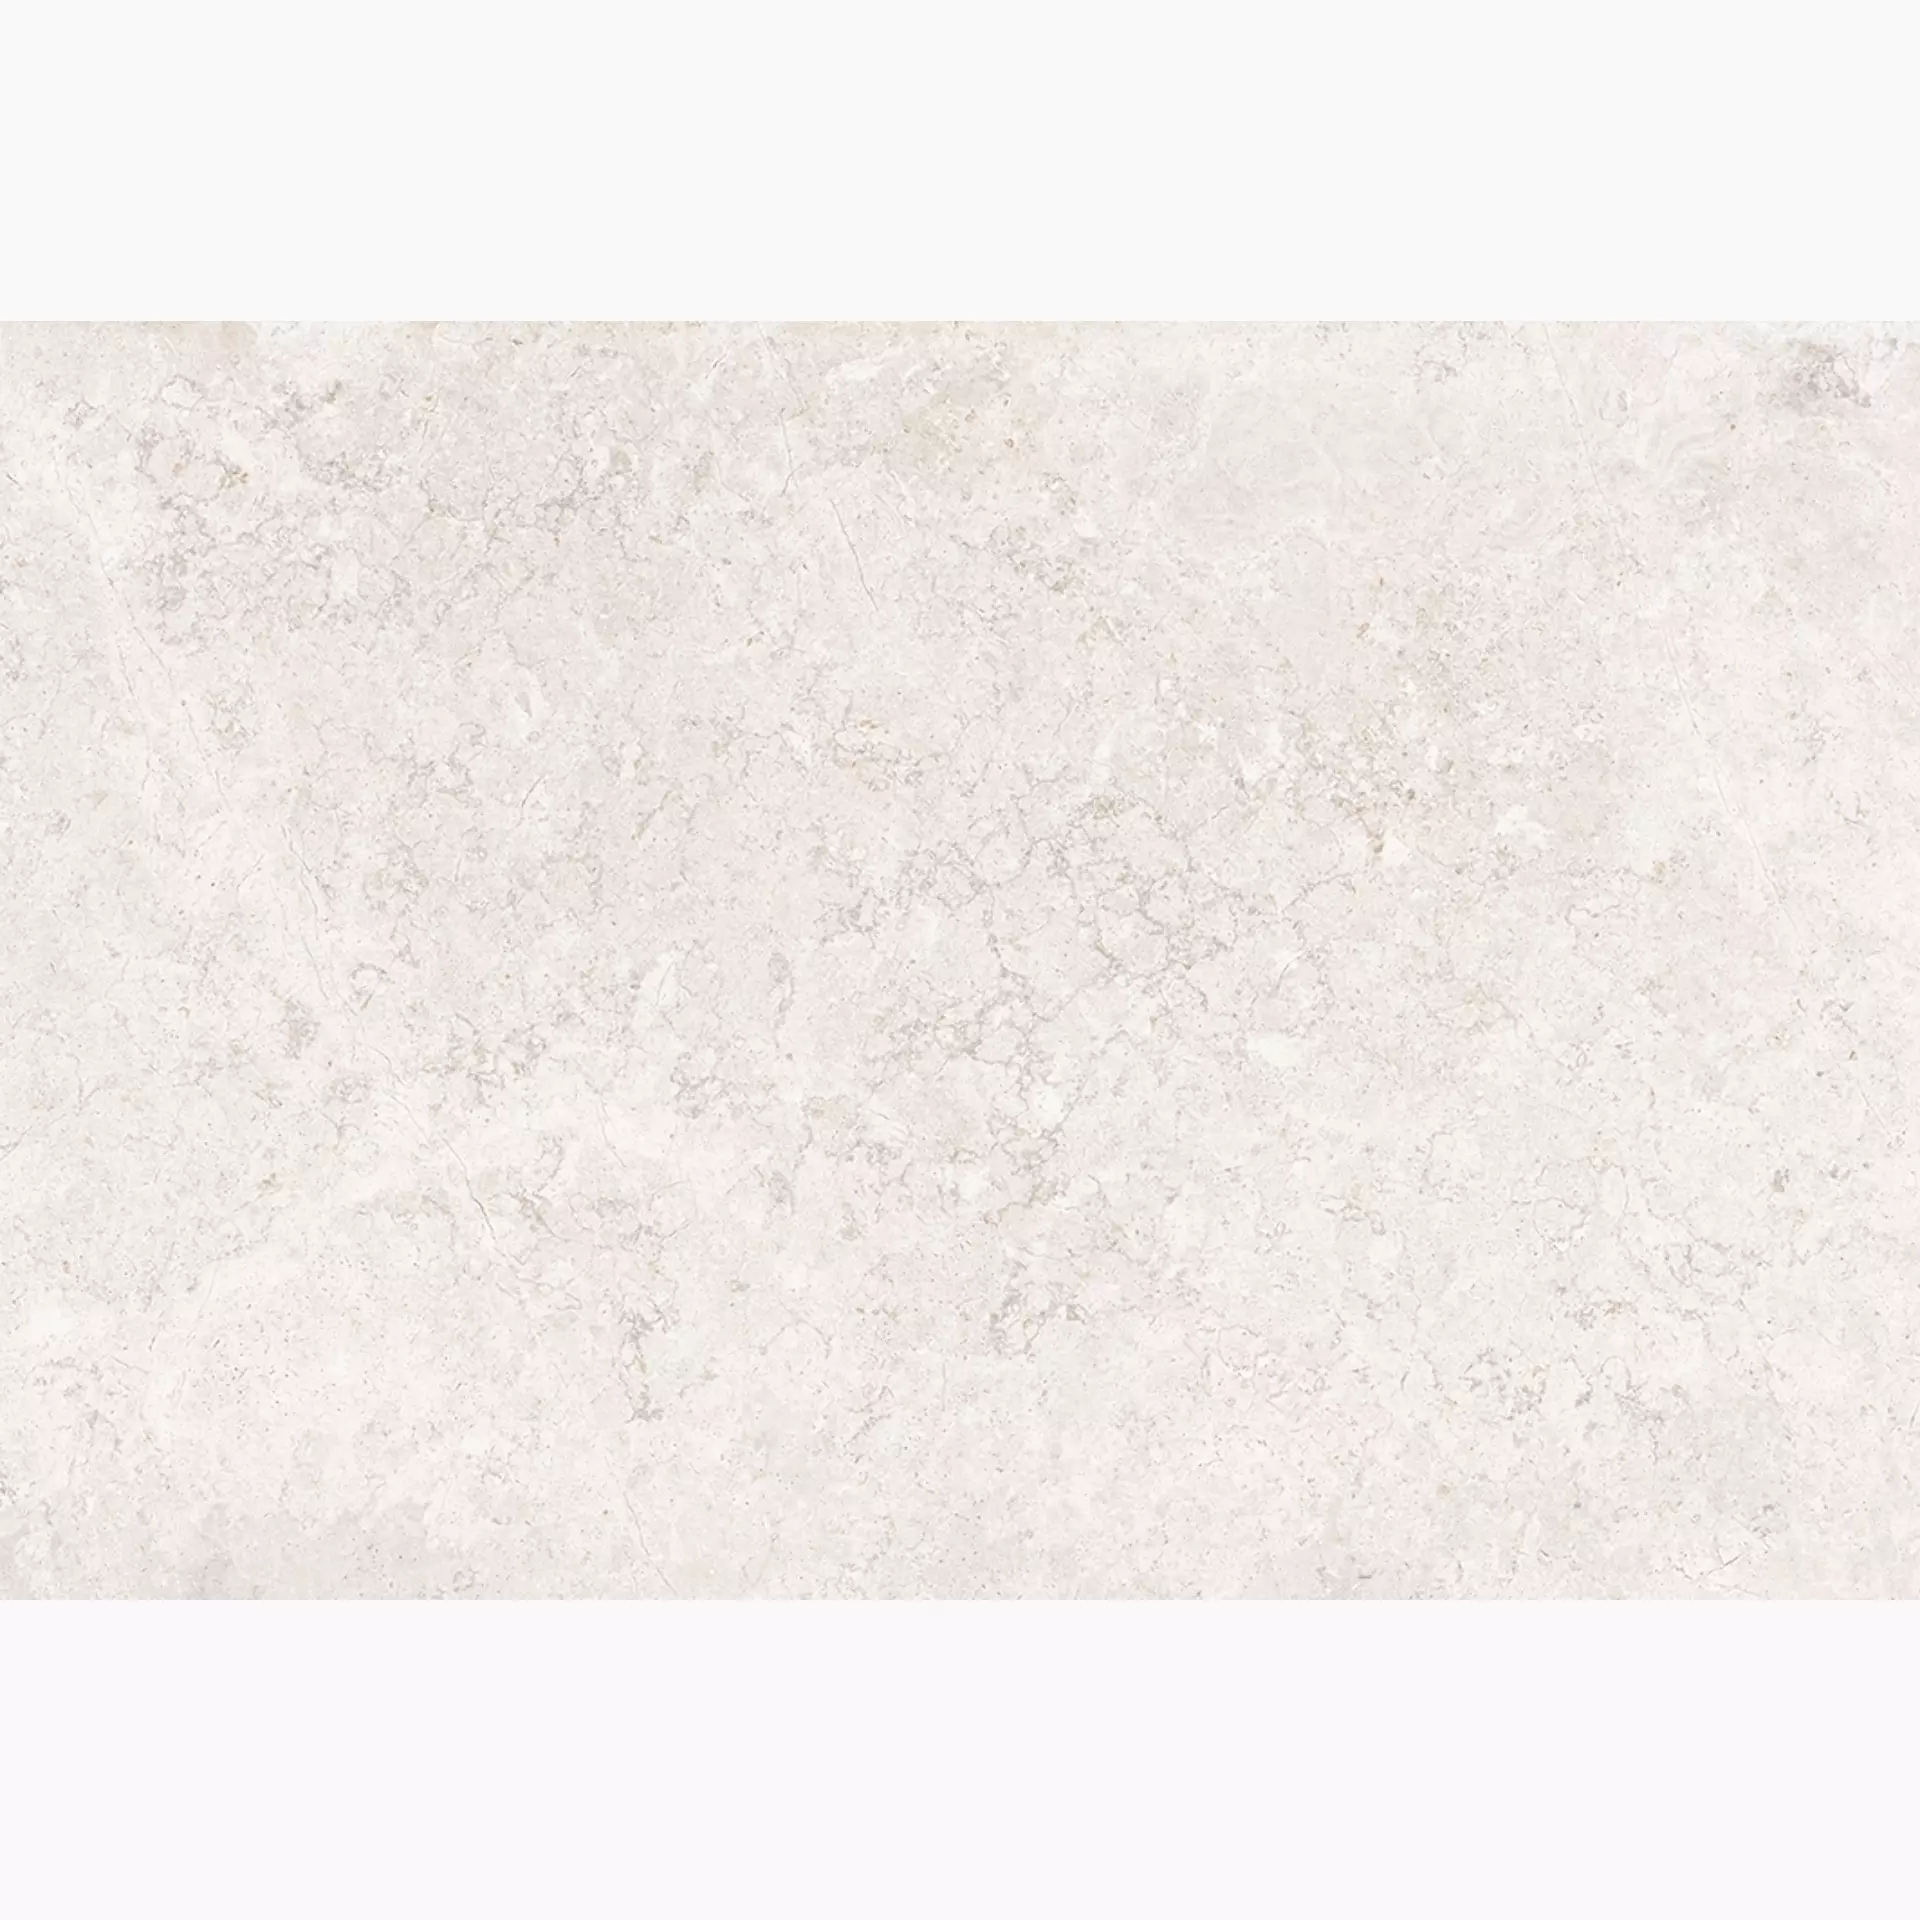 Sichenia Amboise Bianco Soft Grip 0193221 60x90cm rectified 10mm